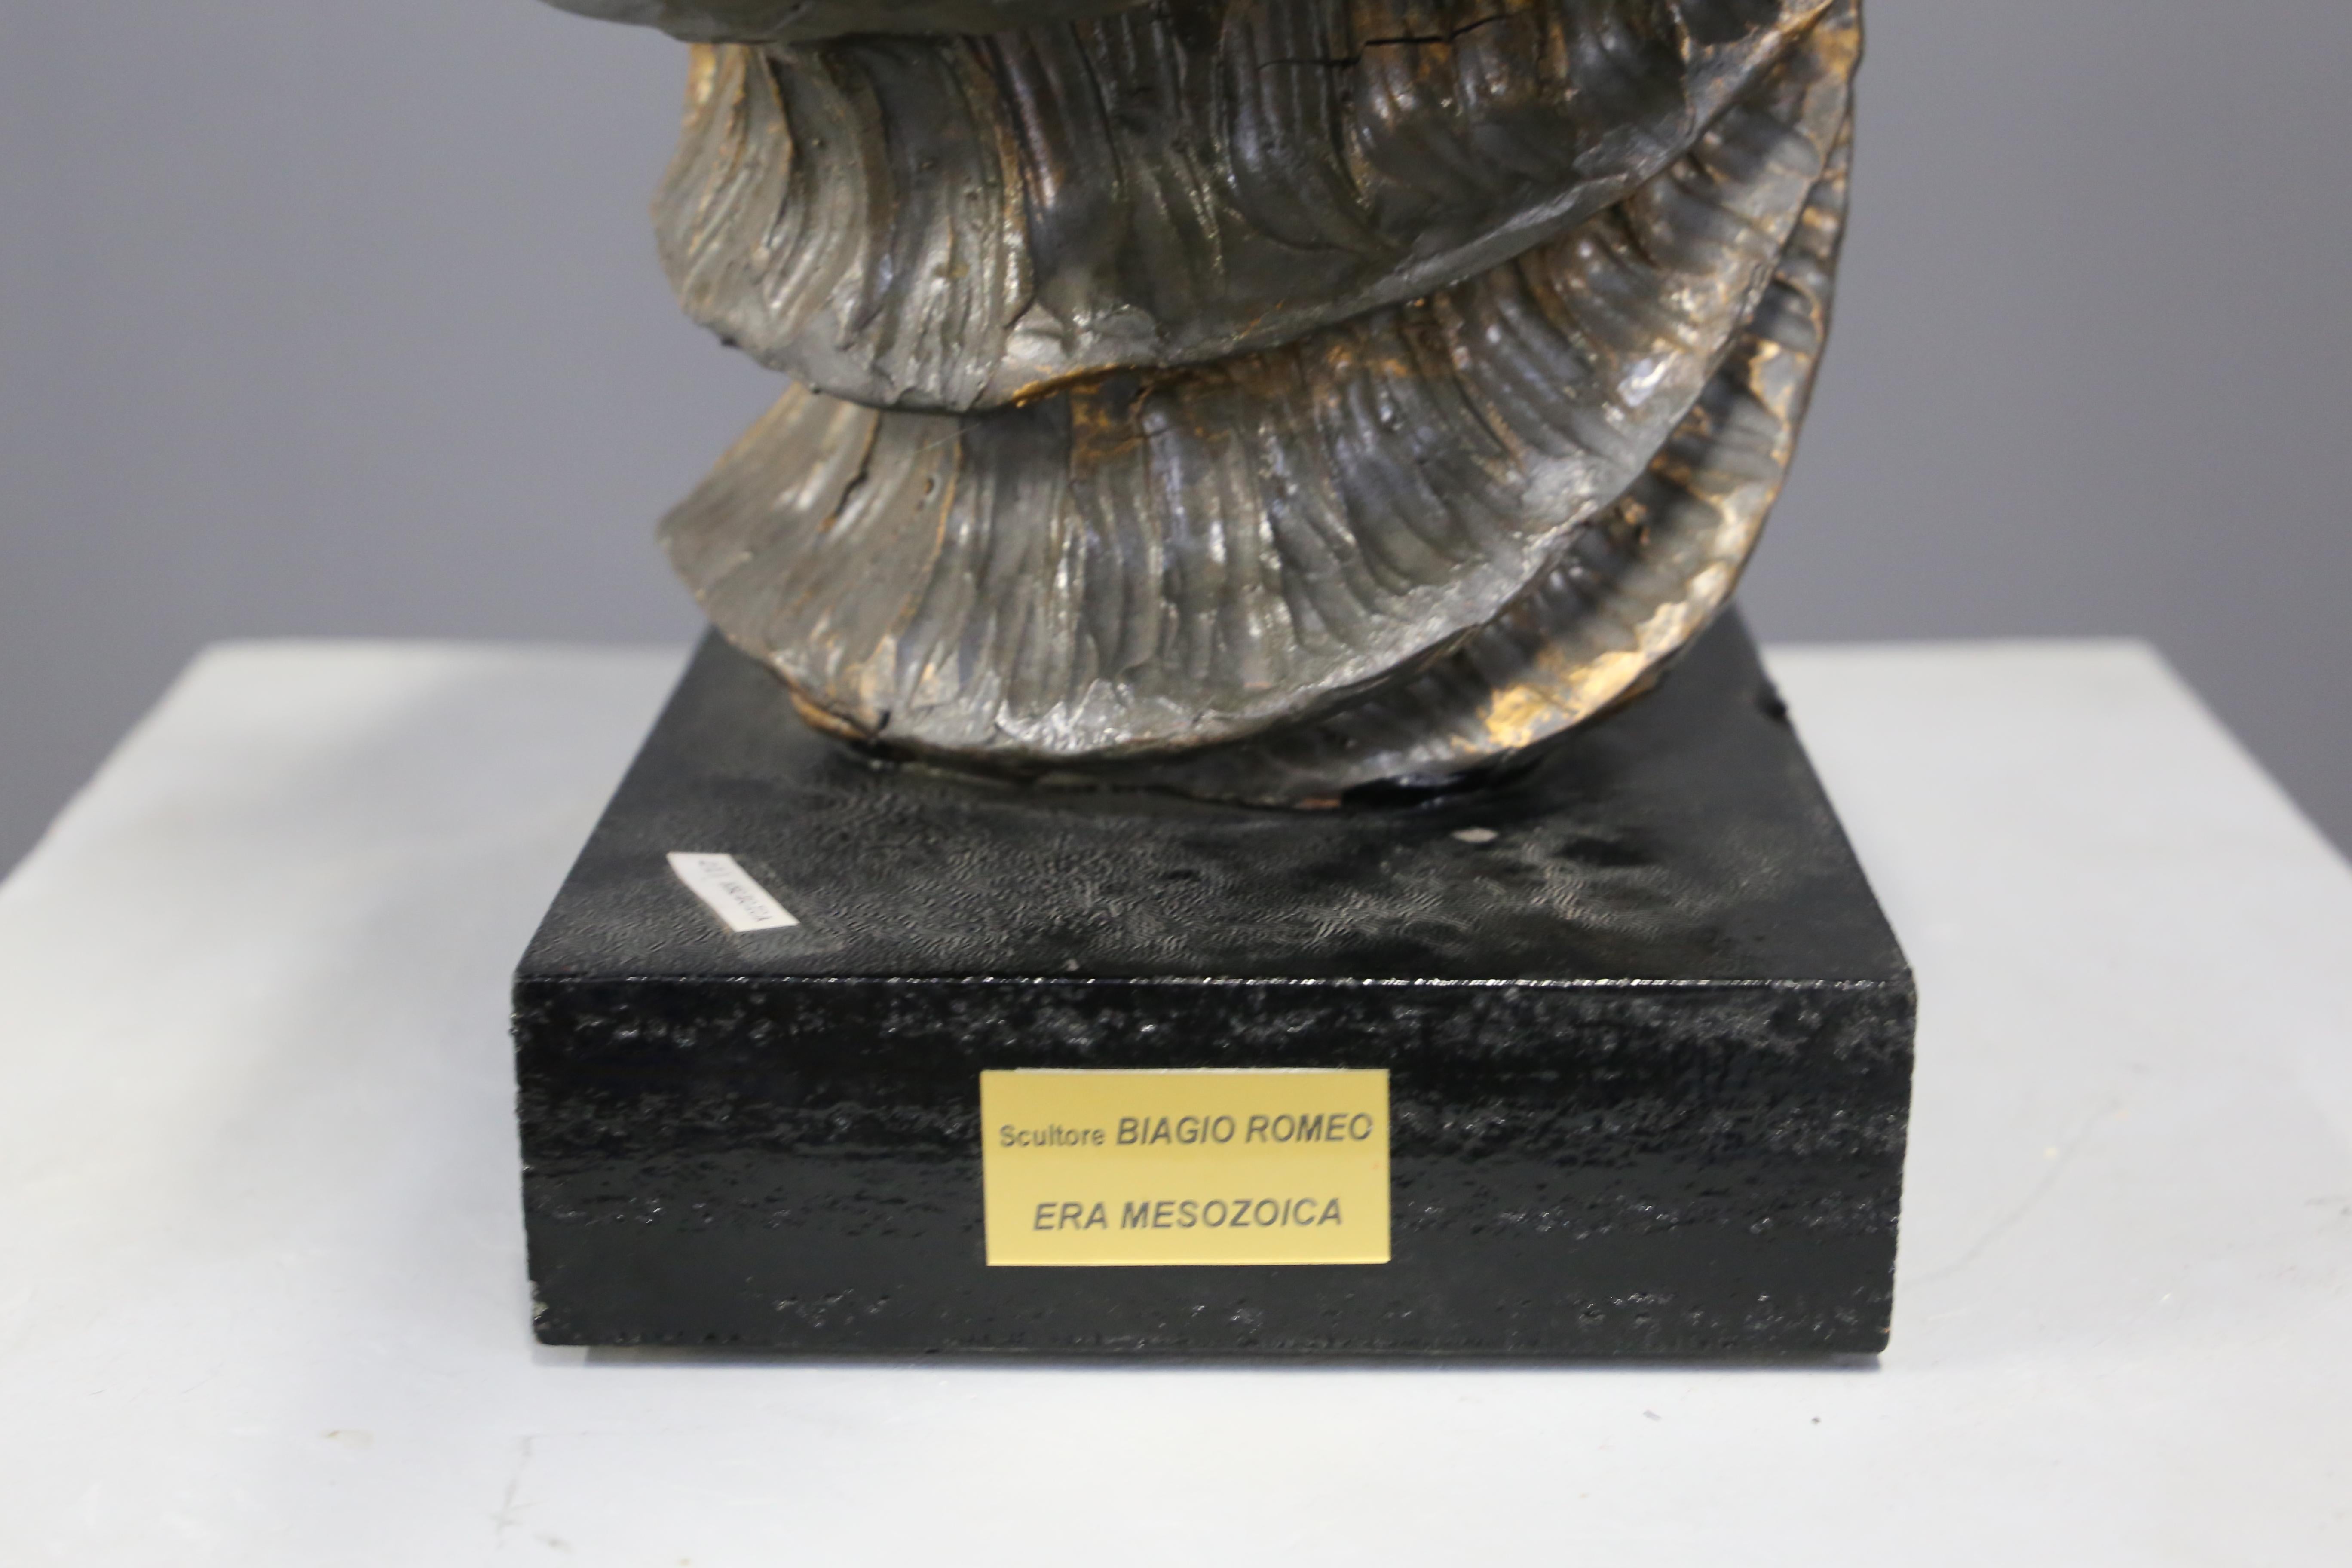 Biagio Romeo Sculpture Resine Mesozoic Era, Signed, 1995 For Sale 1